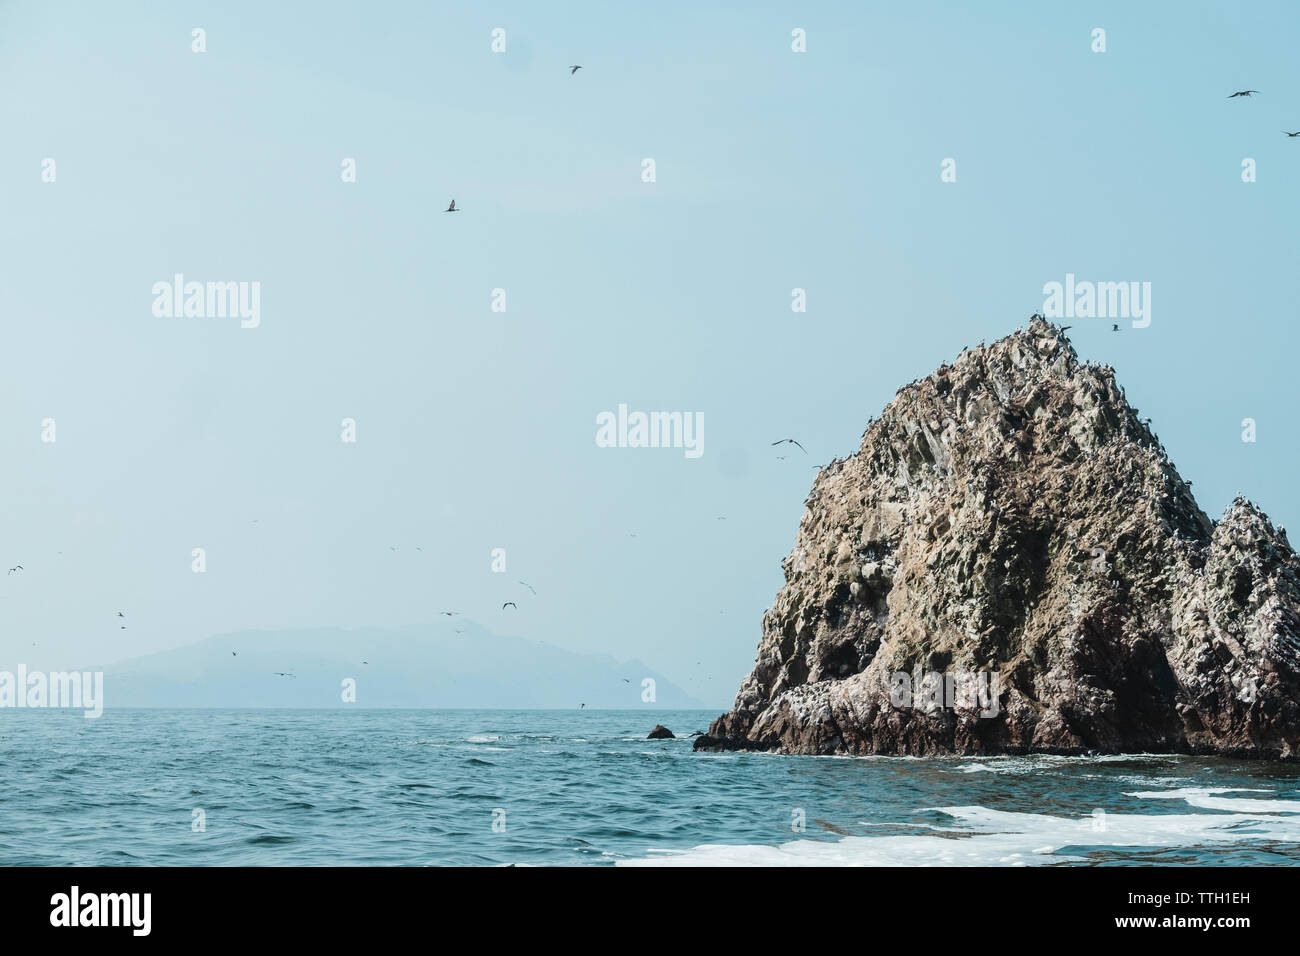 Sea birds on a rock formation, Islas Ballestas, Paracas, Peru Stock Photo